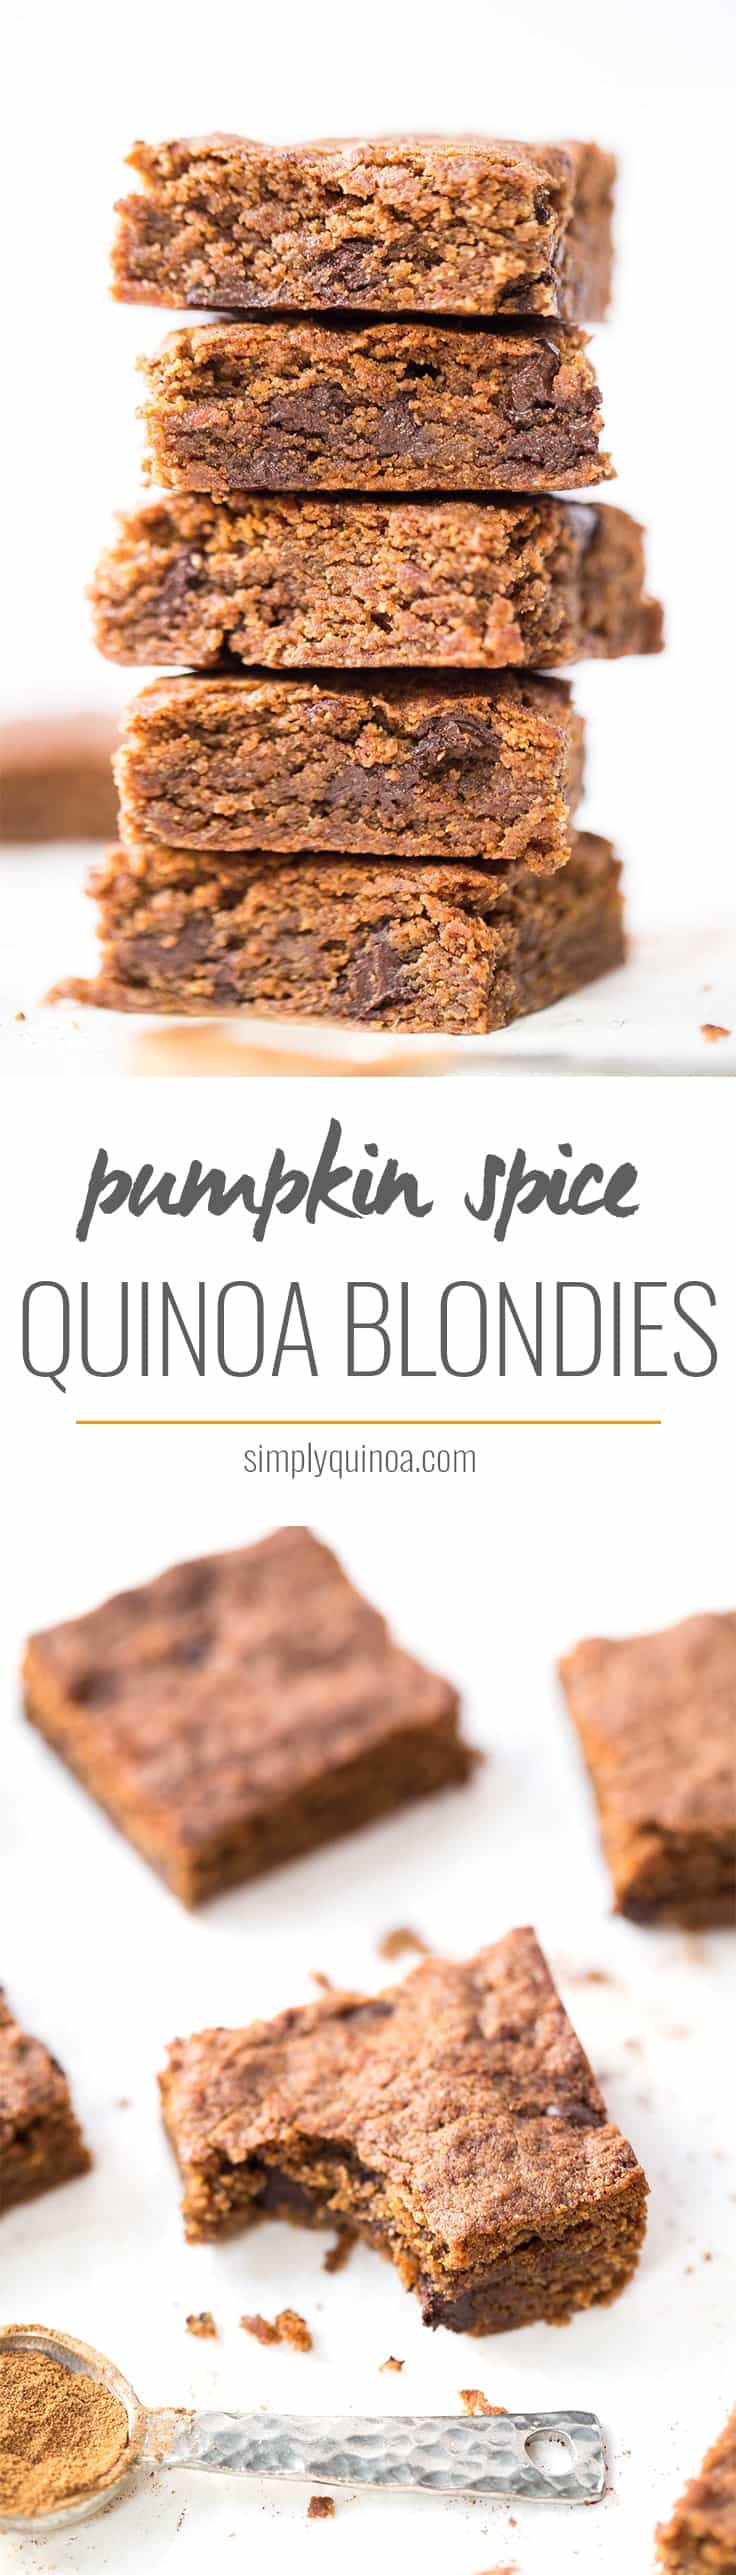 Ooey-gooey Pumpkin Spice Quinoa Blondies with dark chocolate chips! They're the perfect fall dessert!